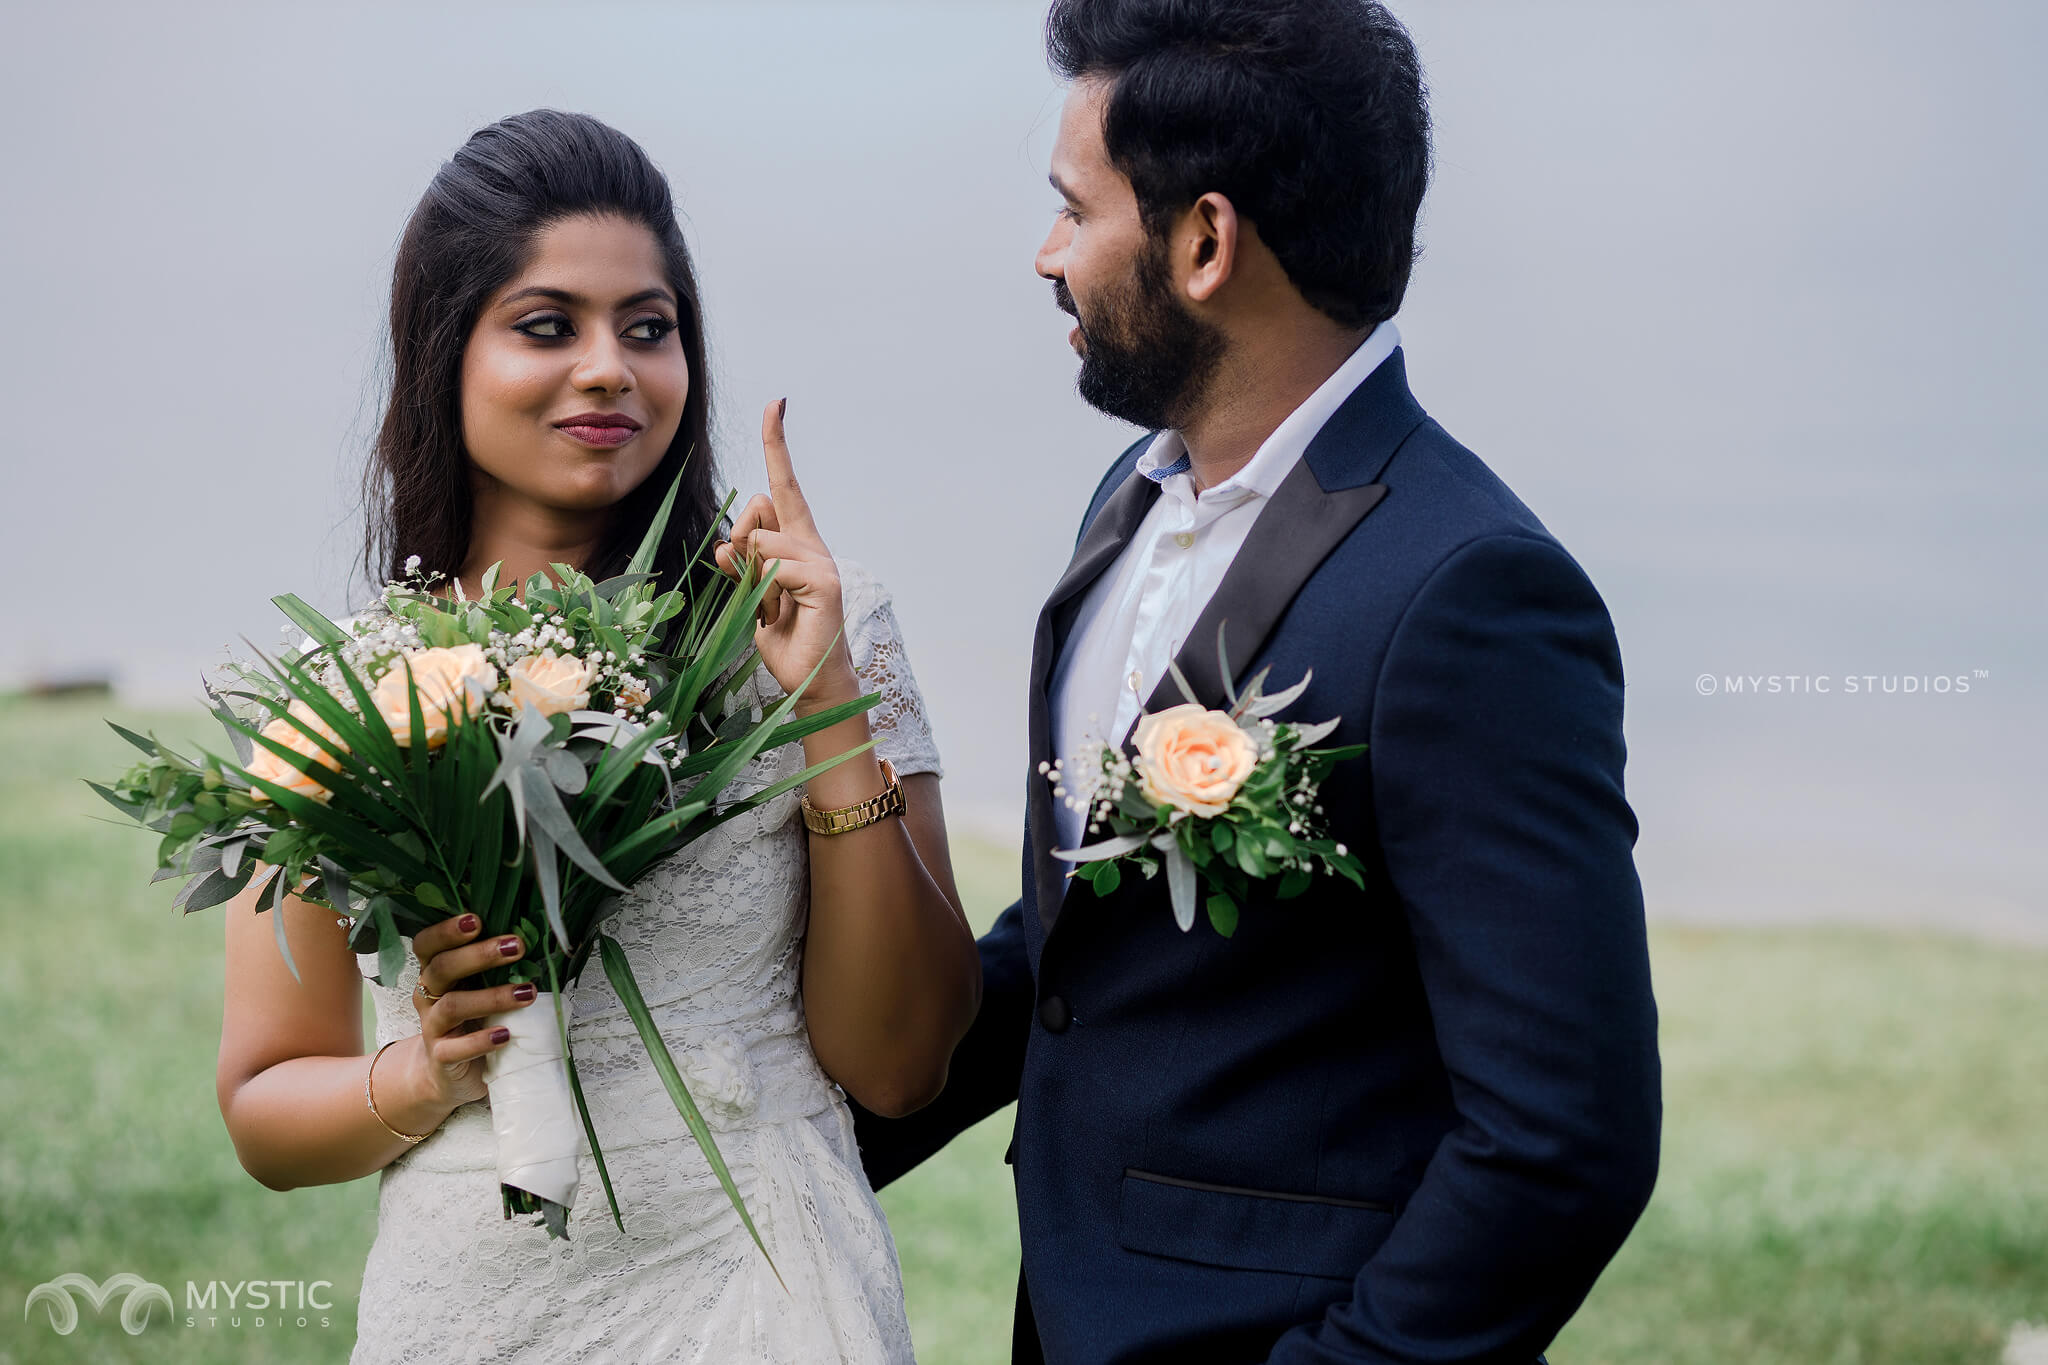 Christian Wedding Photography in Kerala • Wowdings